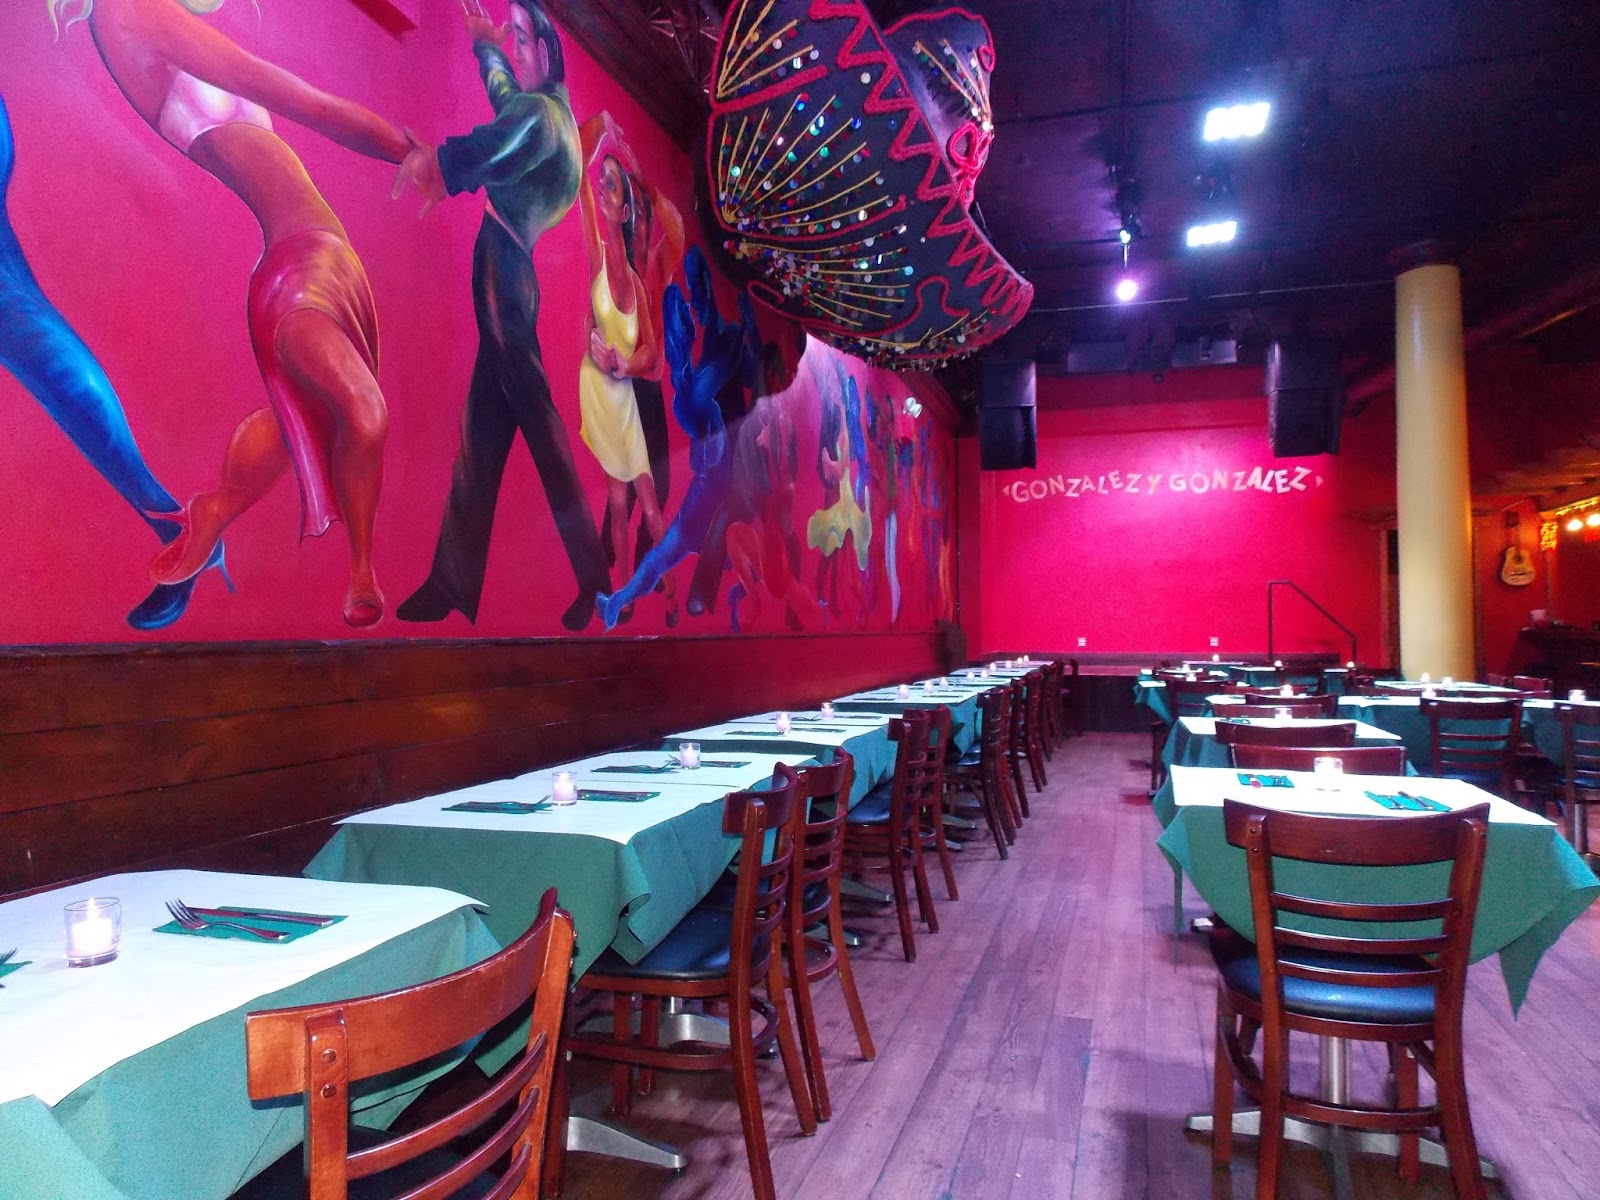 Photo of Gonzalez y Gonzalez in New York City, New York, United States - 8 Picture of Restaurant, Food, Point of interest, Establishment, Bar, Night club